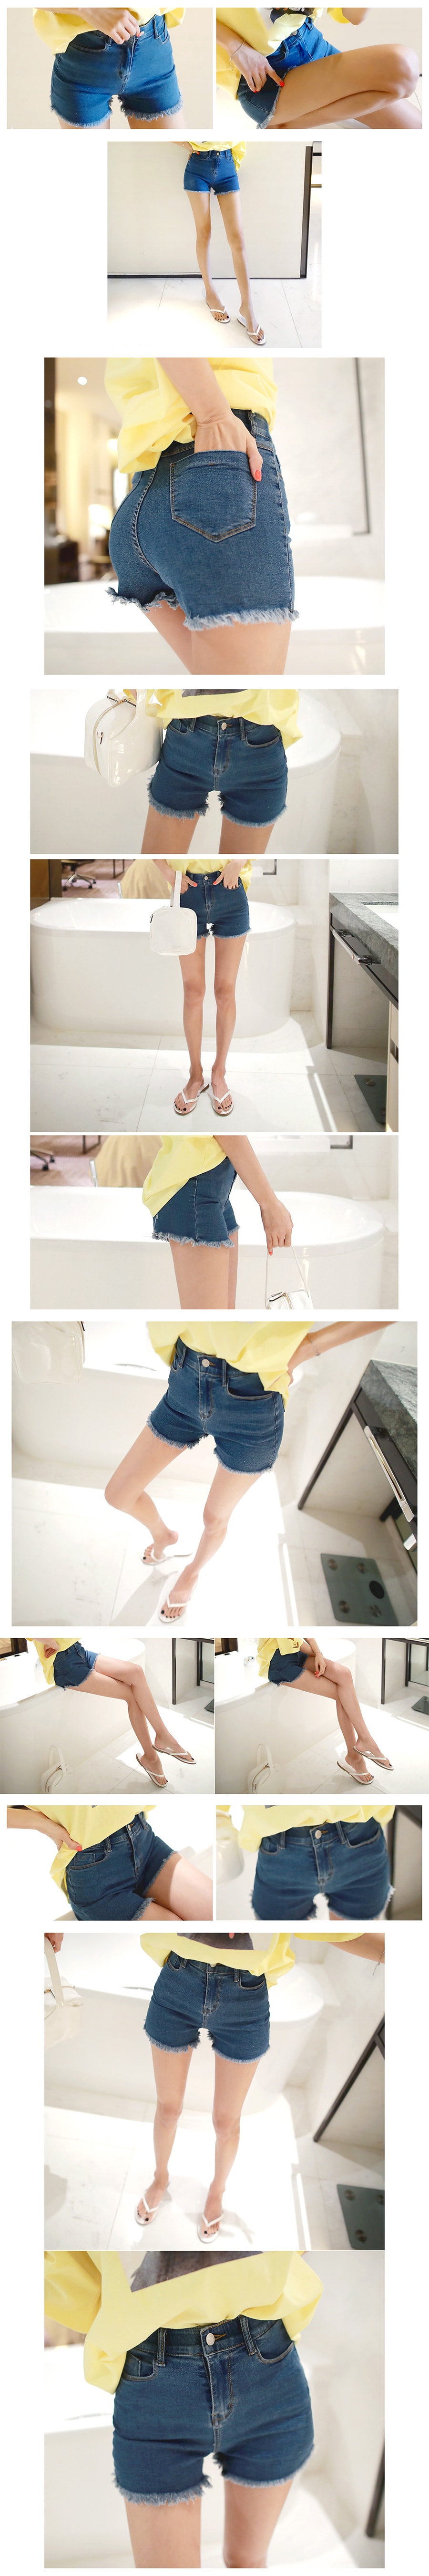 KOREA High-Rise Cut-Off Denim Shorts #Blue M(25-26) [Free Shipping]